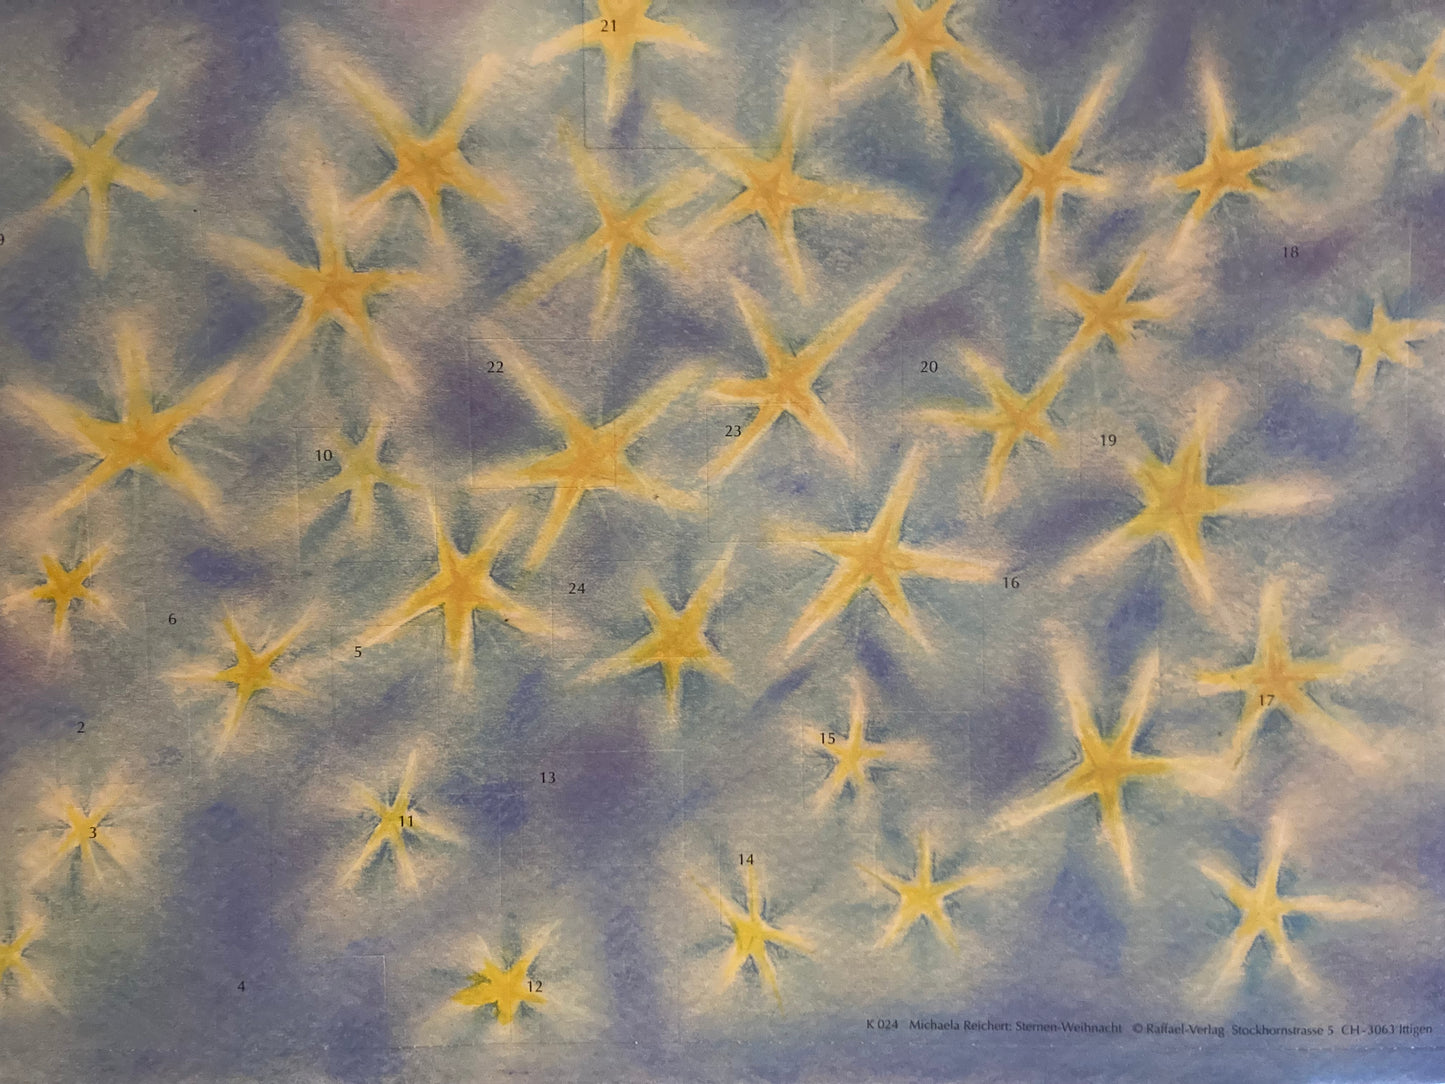 Advent Calendar - NIGHTTIME STARS